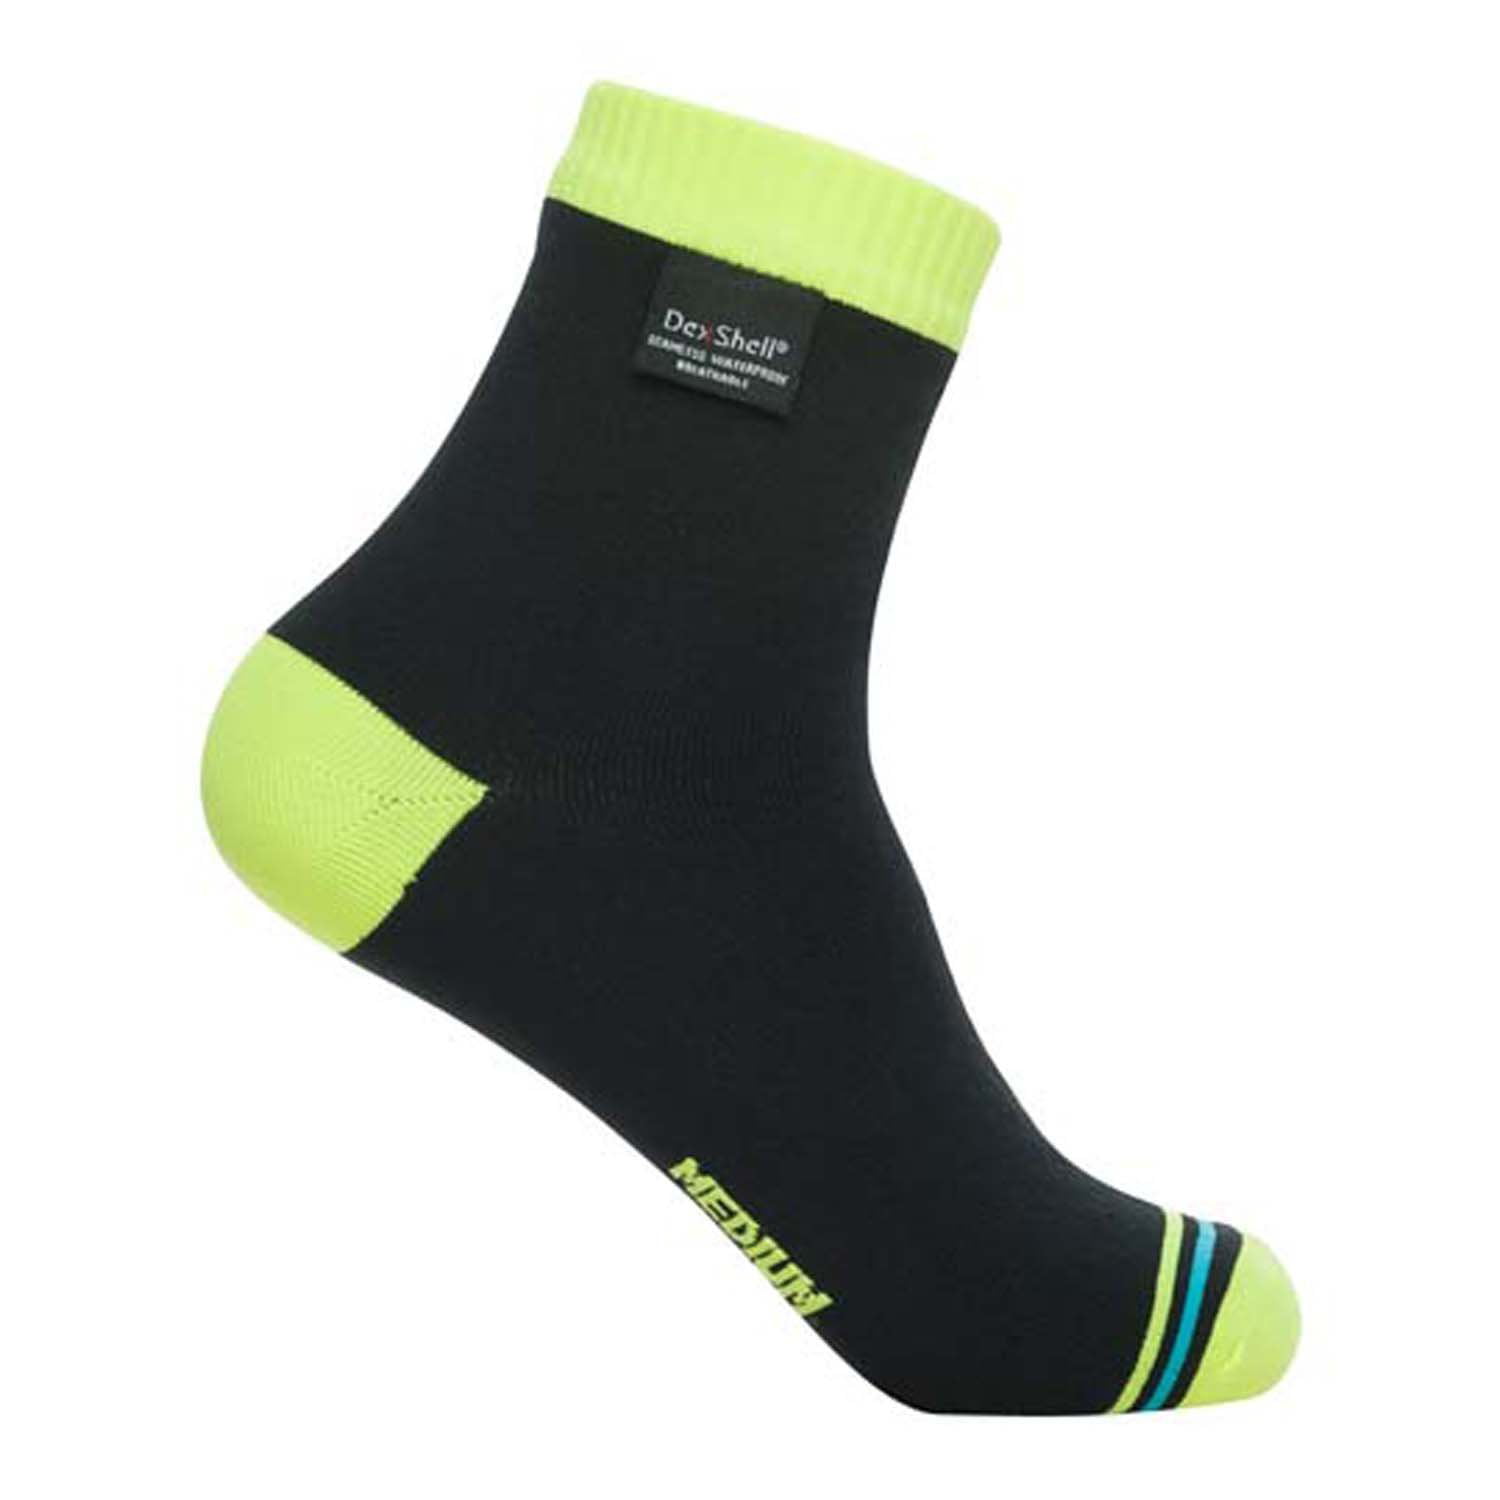 Ultralite Waterproof Socks - Walmart.com